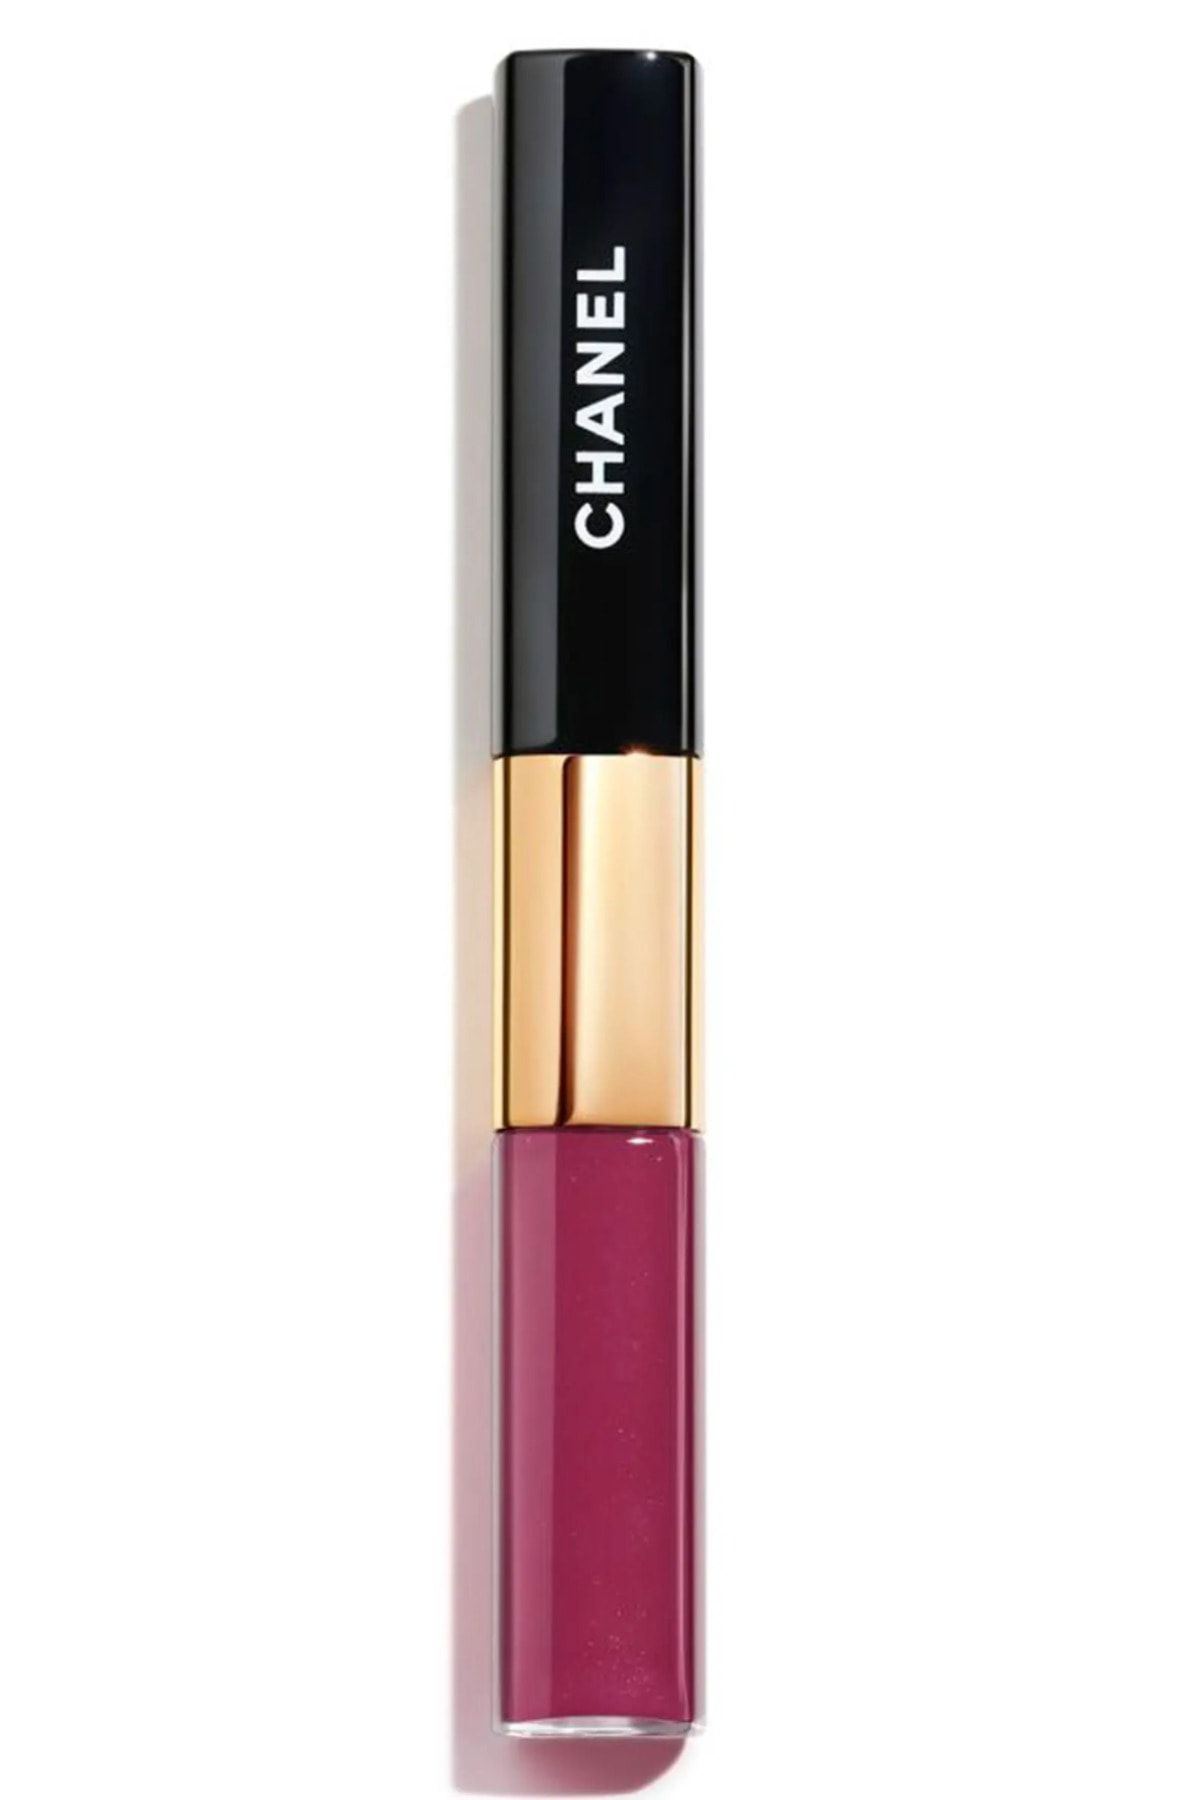 Chanel Le Rouge Duo Ultra Tenue Ultra Wear Lip Colour